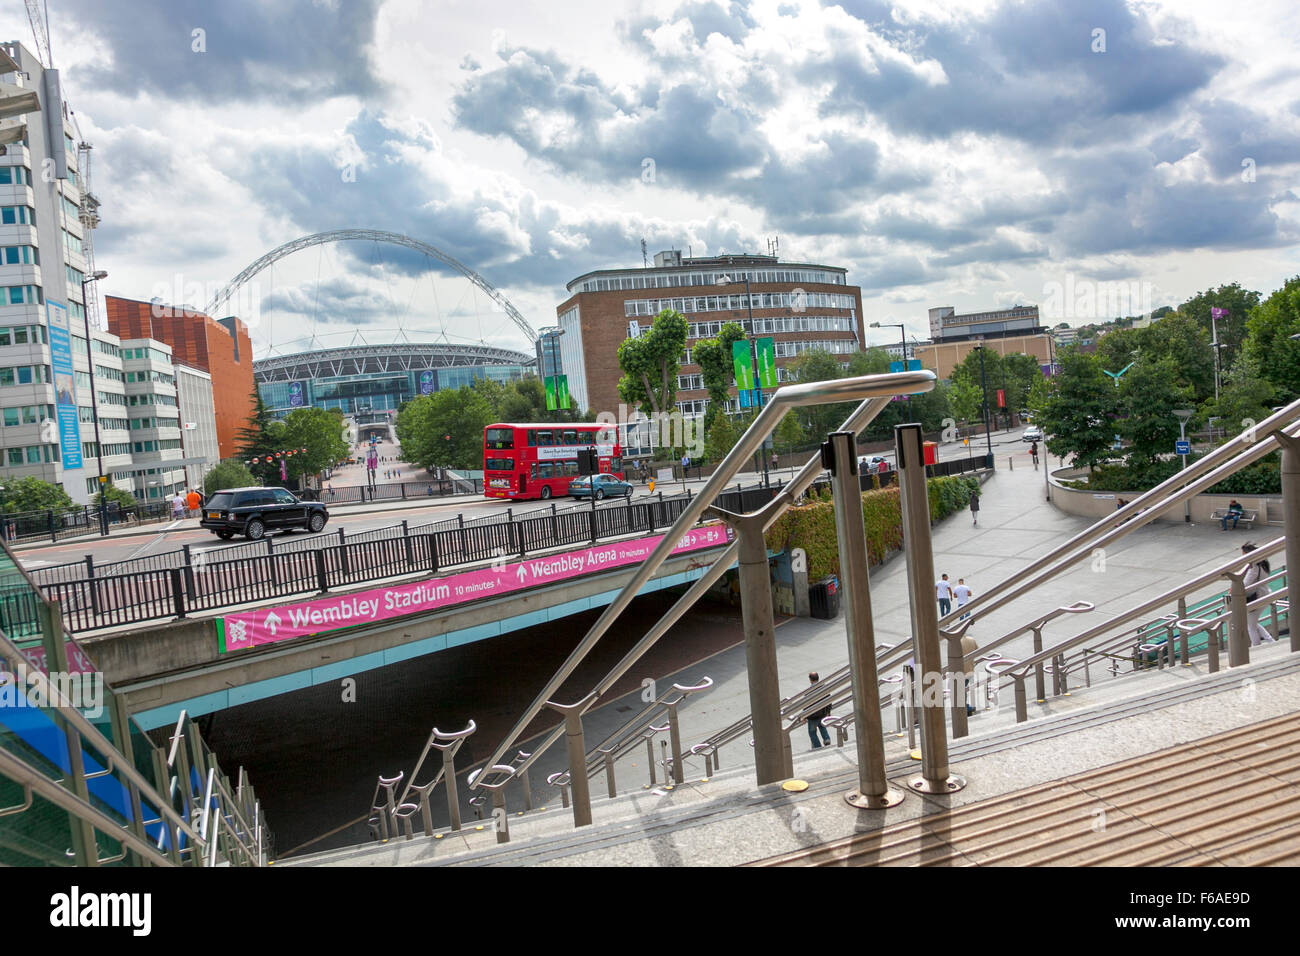 Olympic Way menant au stade de Wembley, Londres, Angleterre Banque D'Images